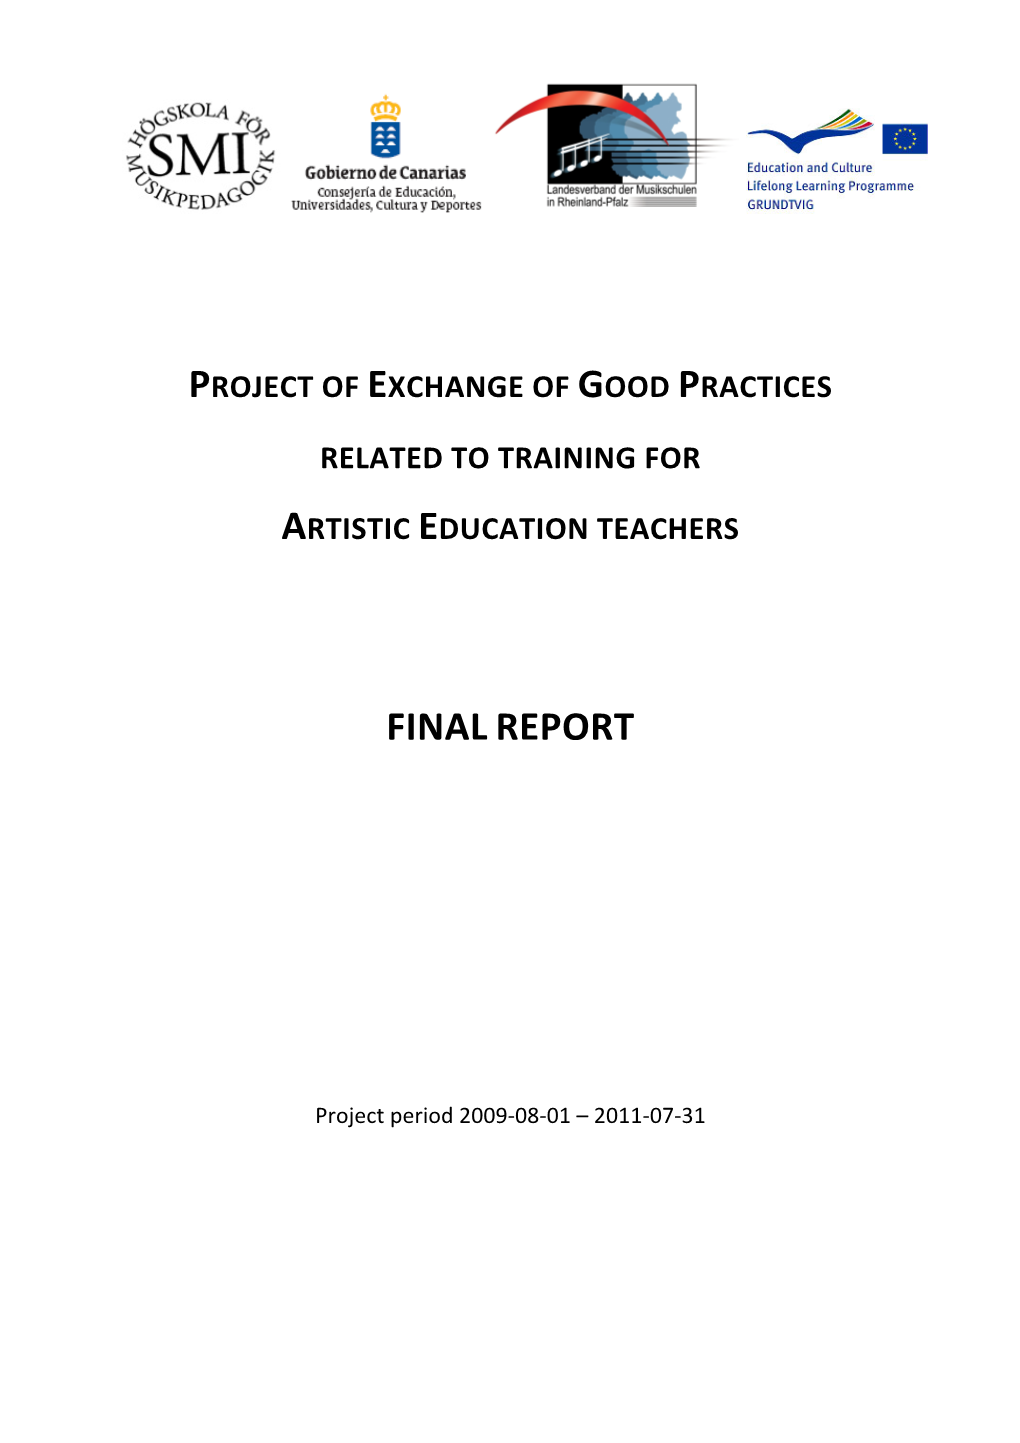 Artistic Education Teachers Final Report